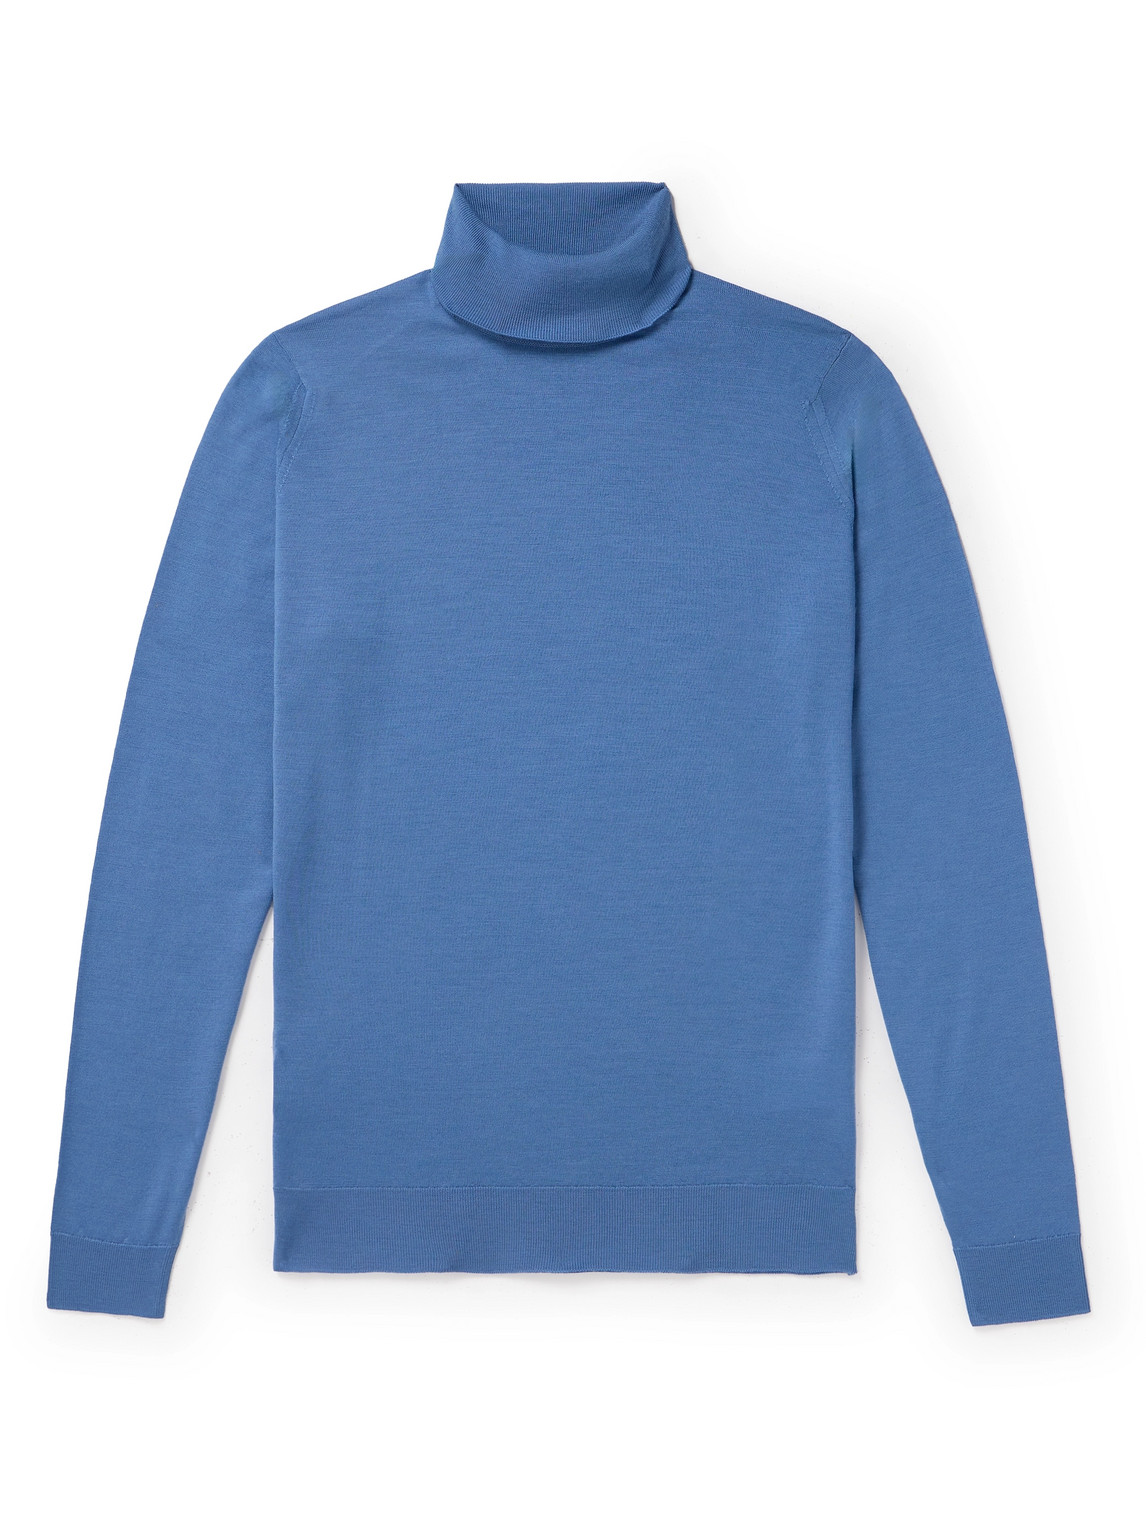 Cherwell Slim-Fit Merino Wool Rollneck Sweater